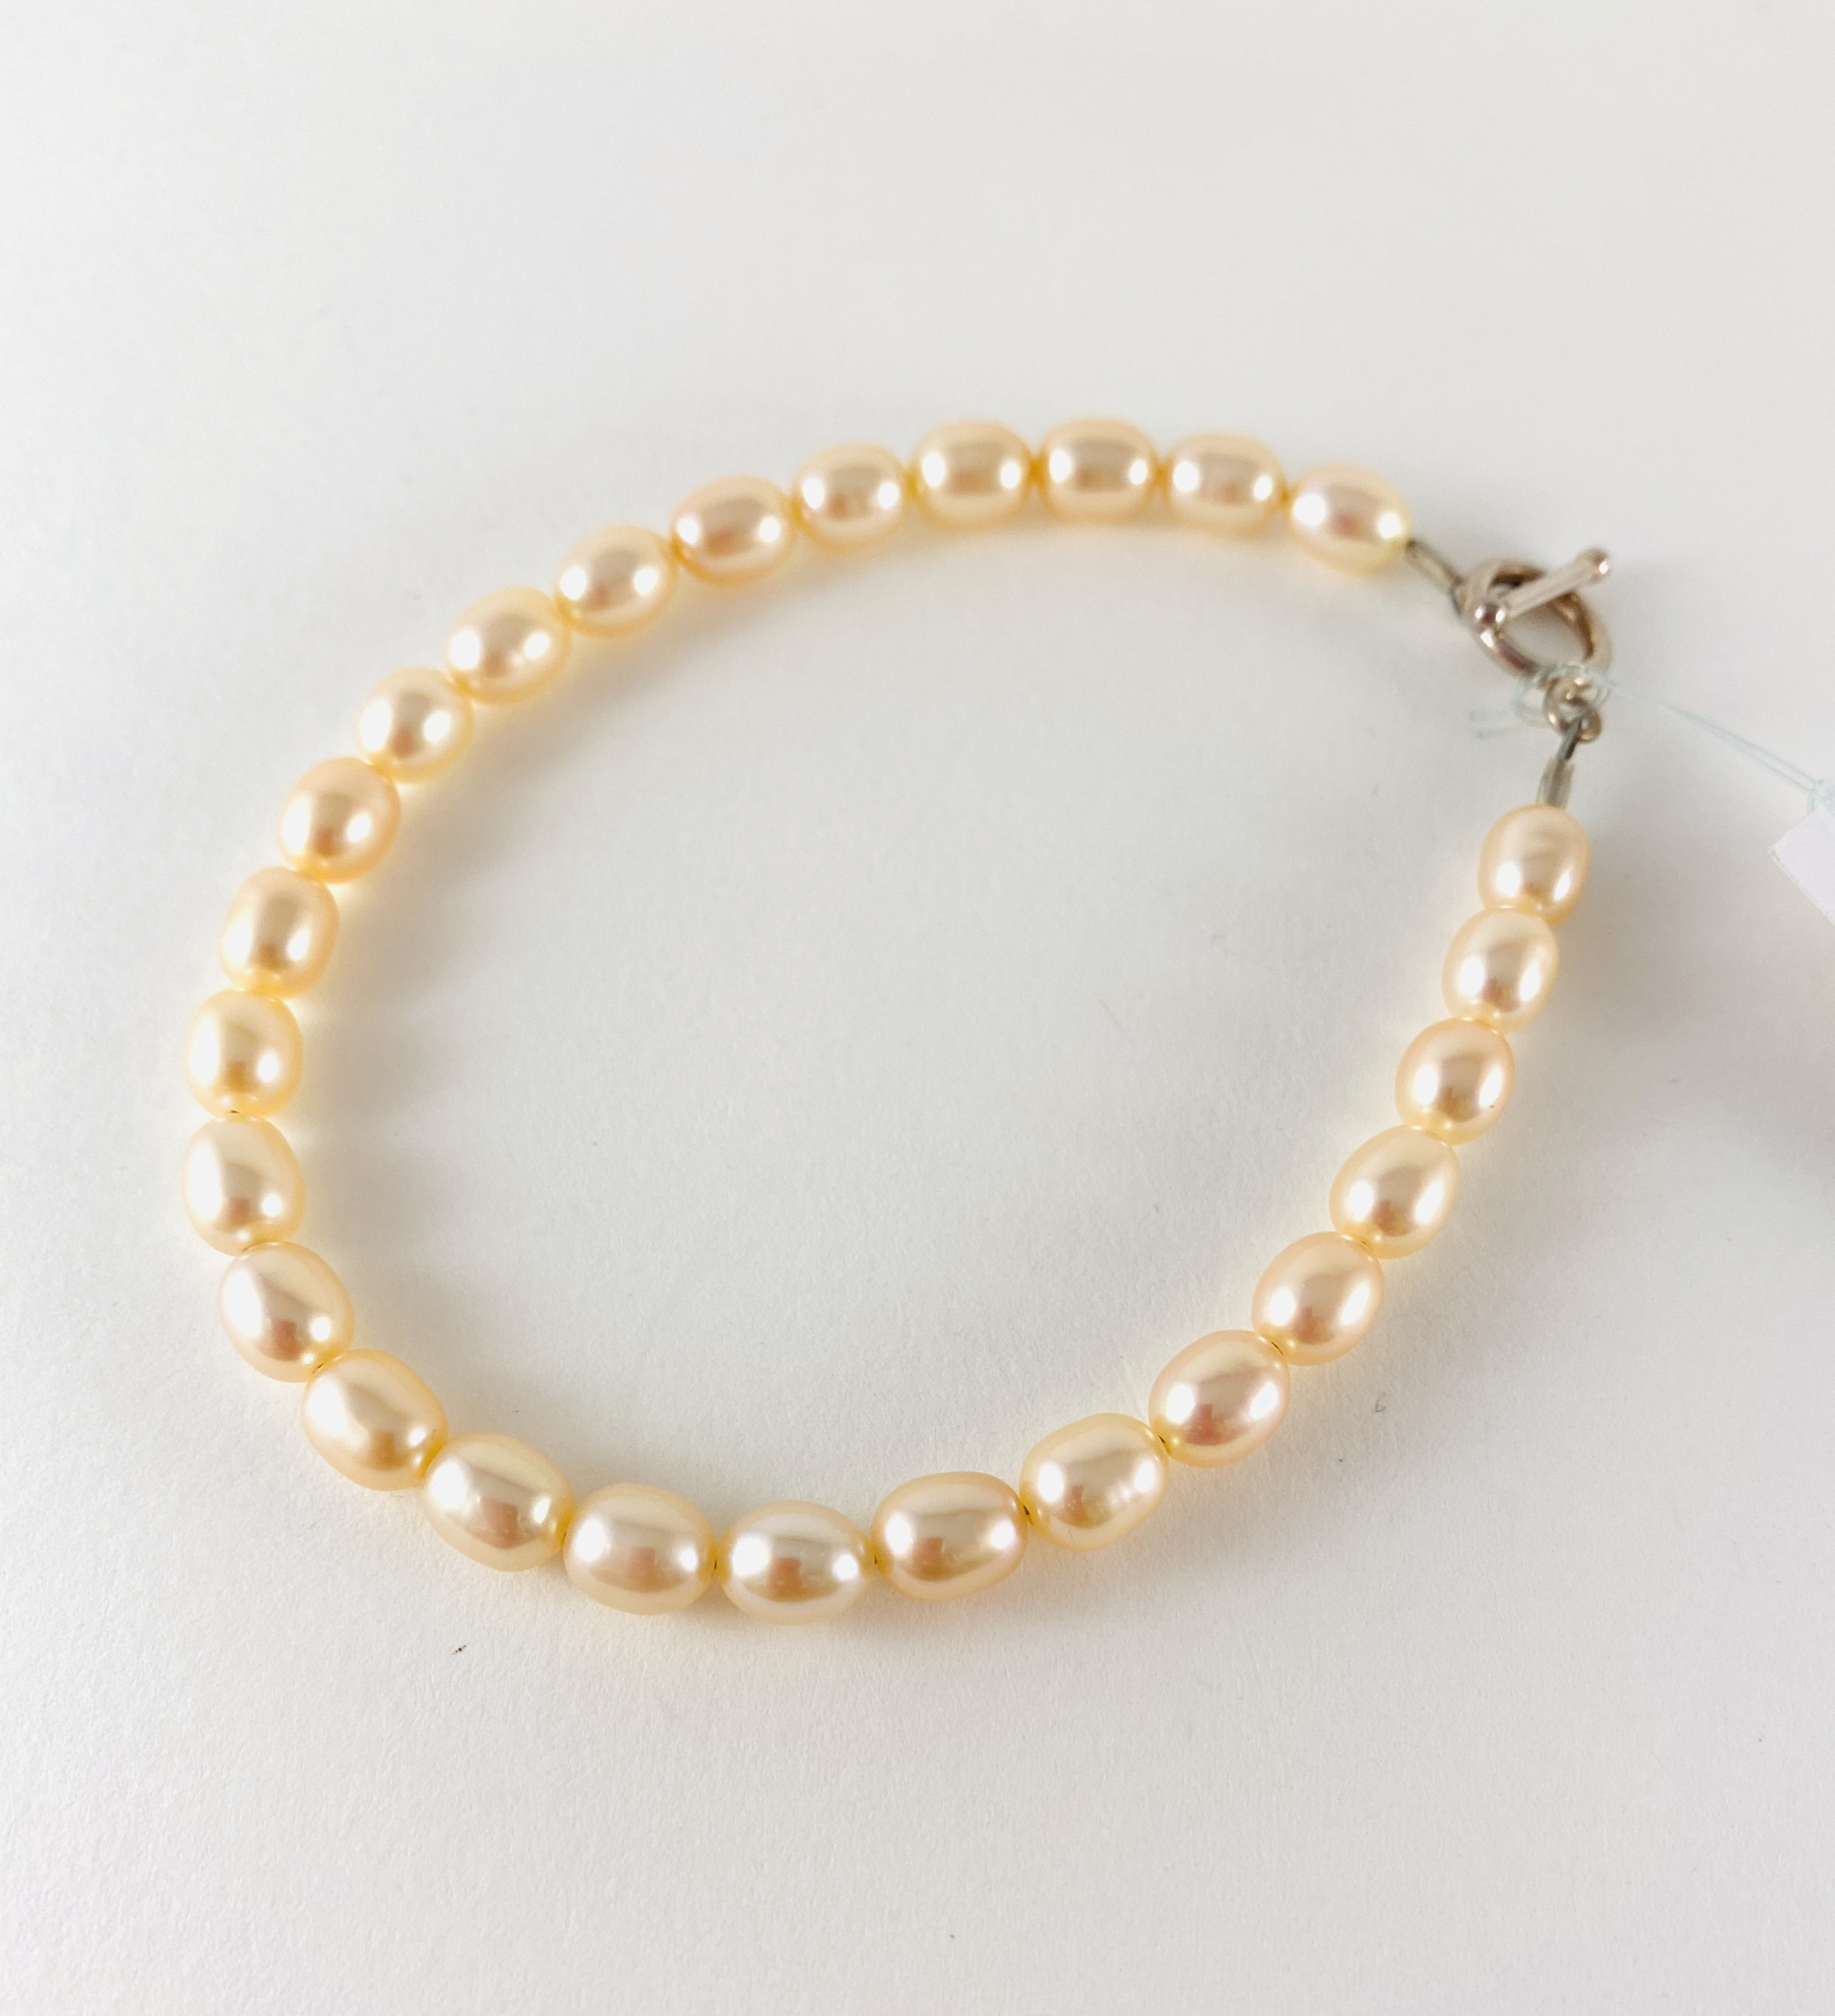 Peach Pearl Bracelet, toggle clasp P5 by Nance Trueworthy